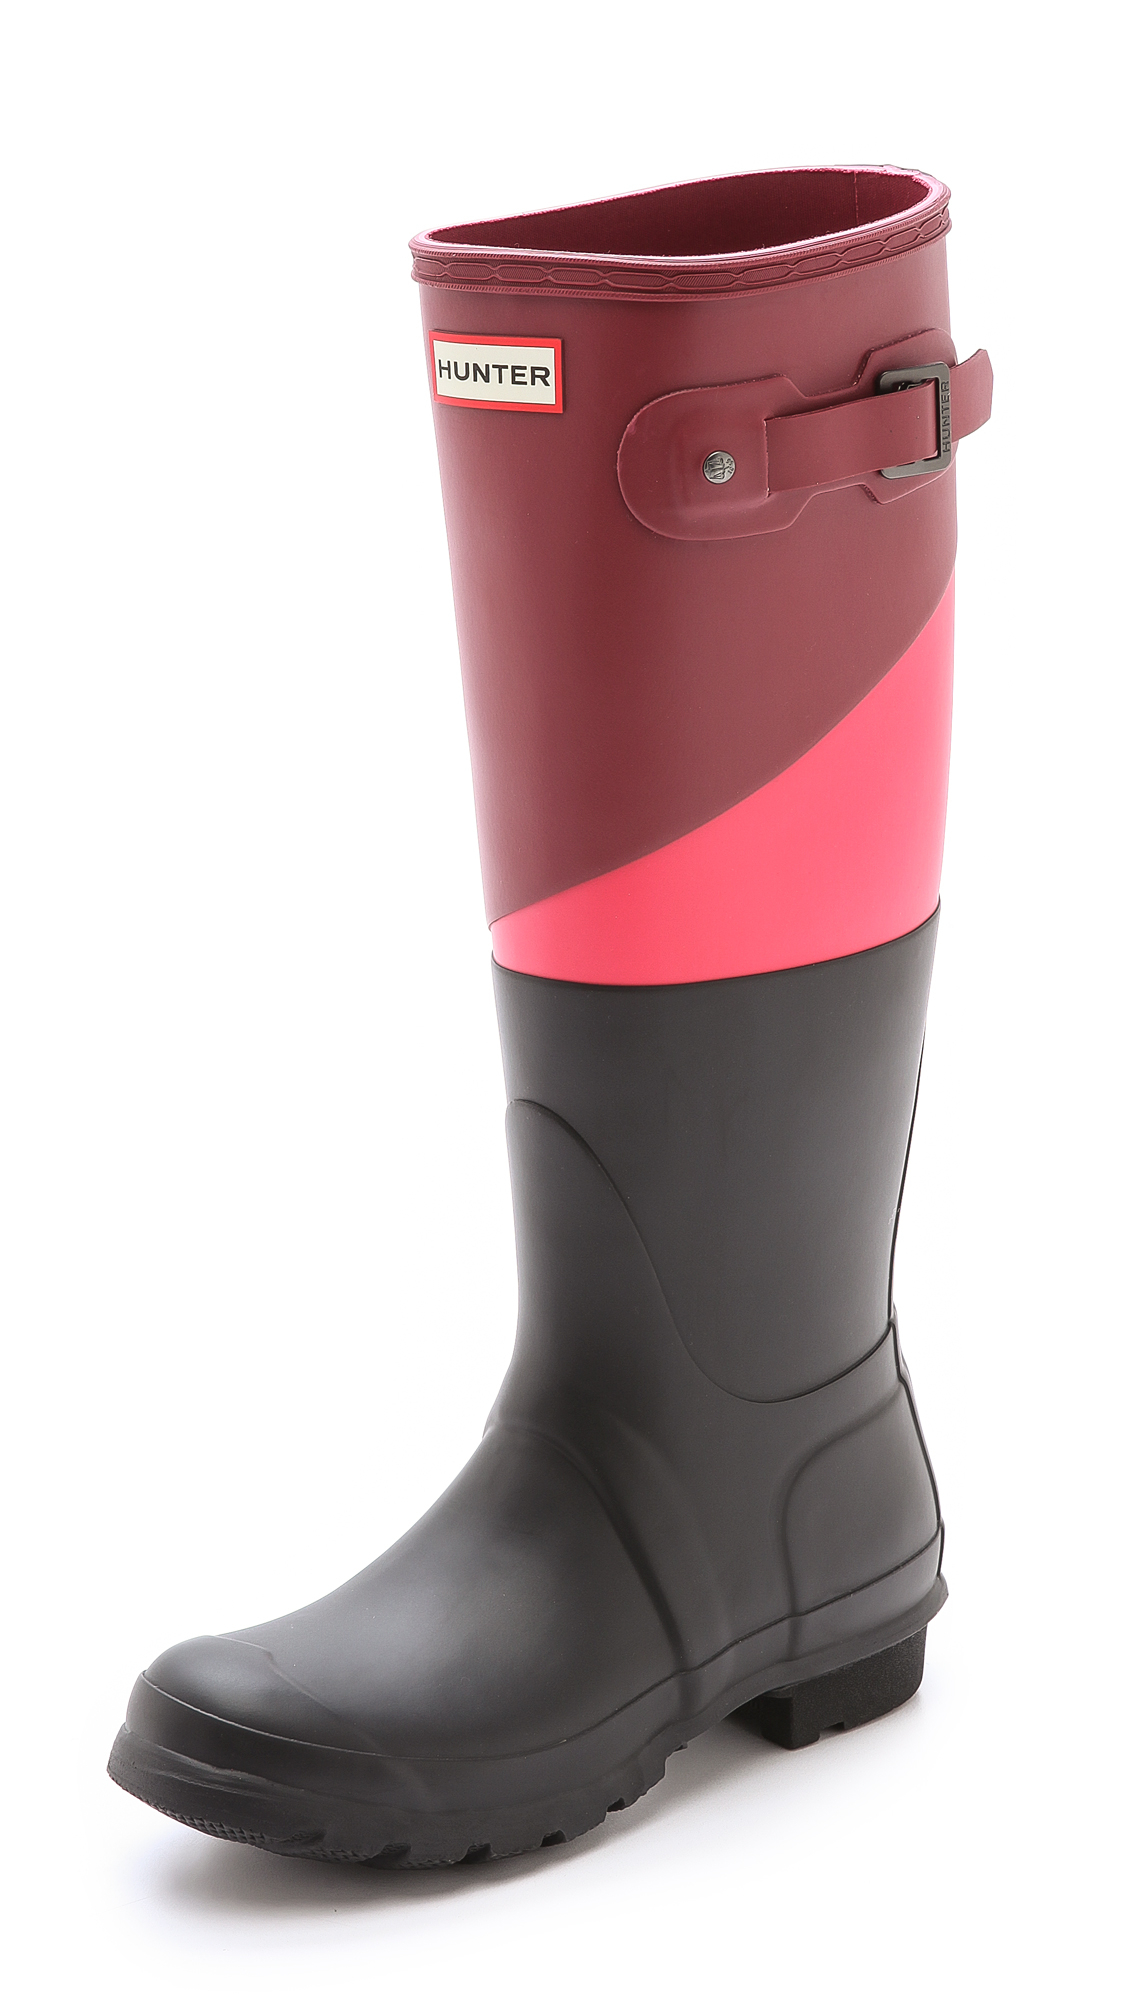 HUNTER Original Asymmetrical Colorblock Boots - Damson/Bright Watermelon in  Red | Lyst Canada